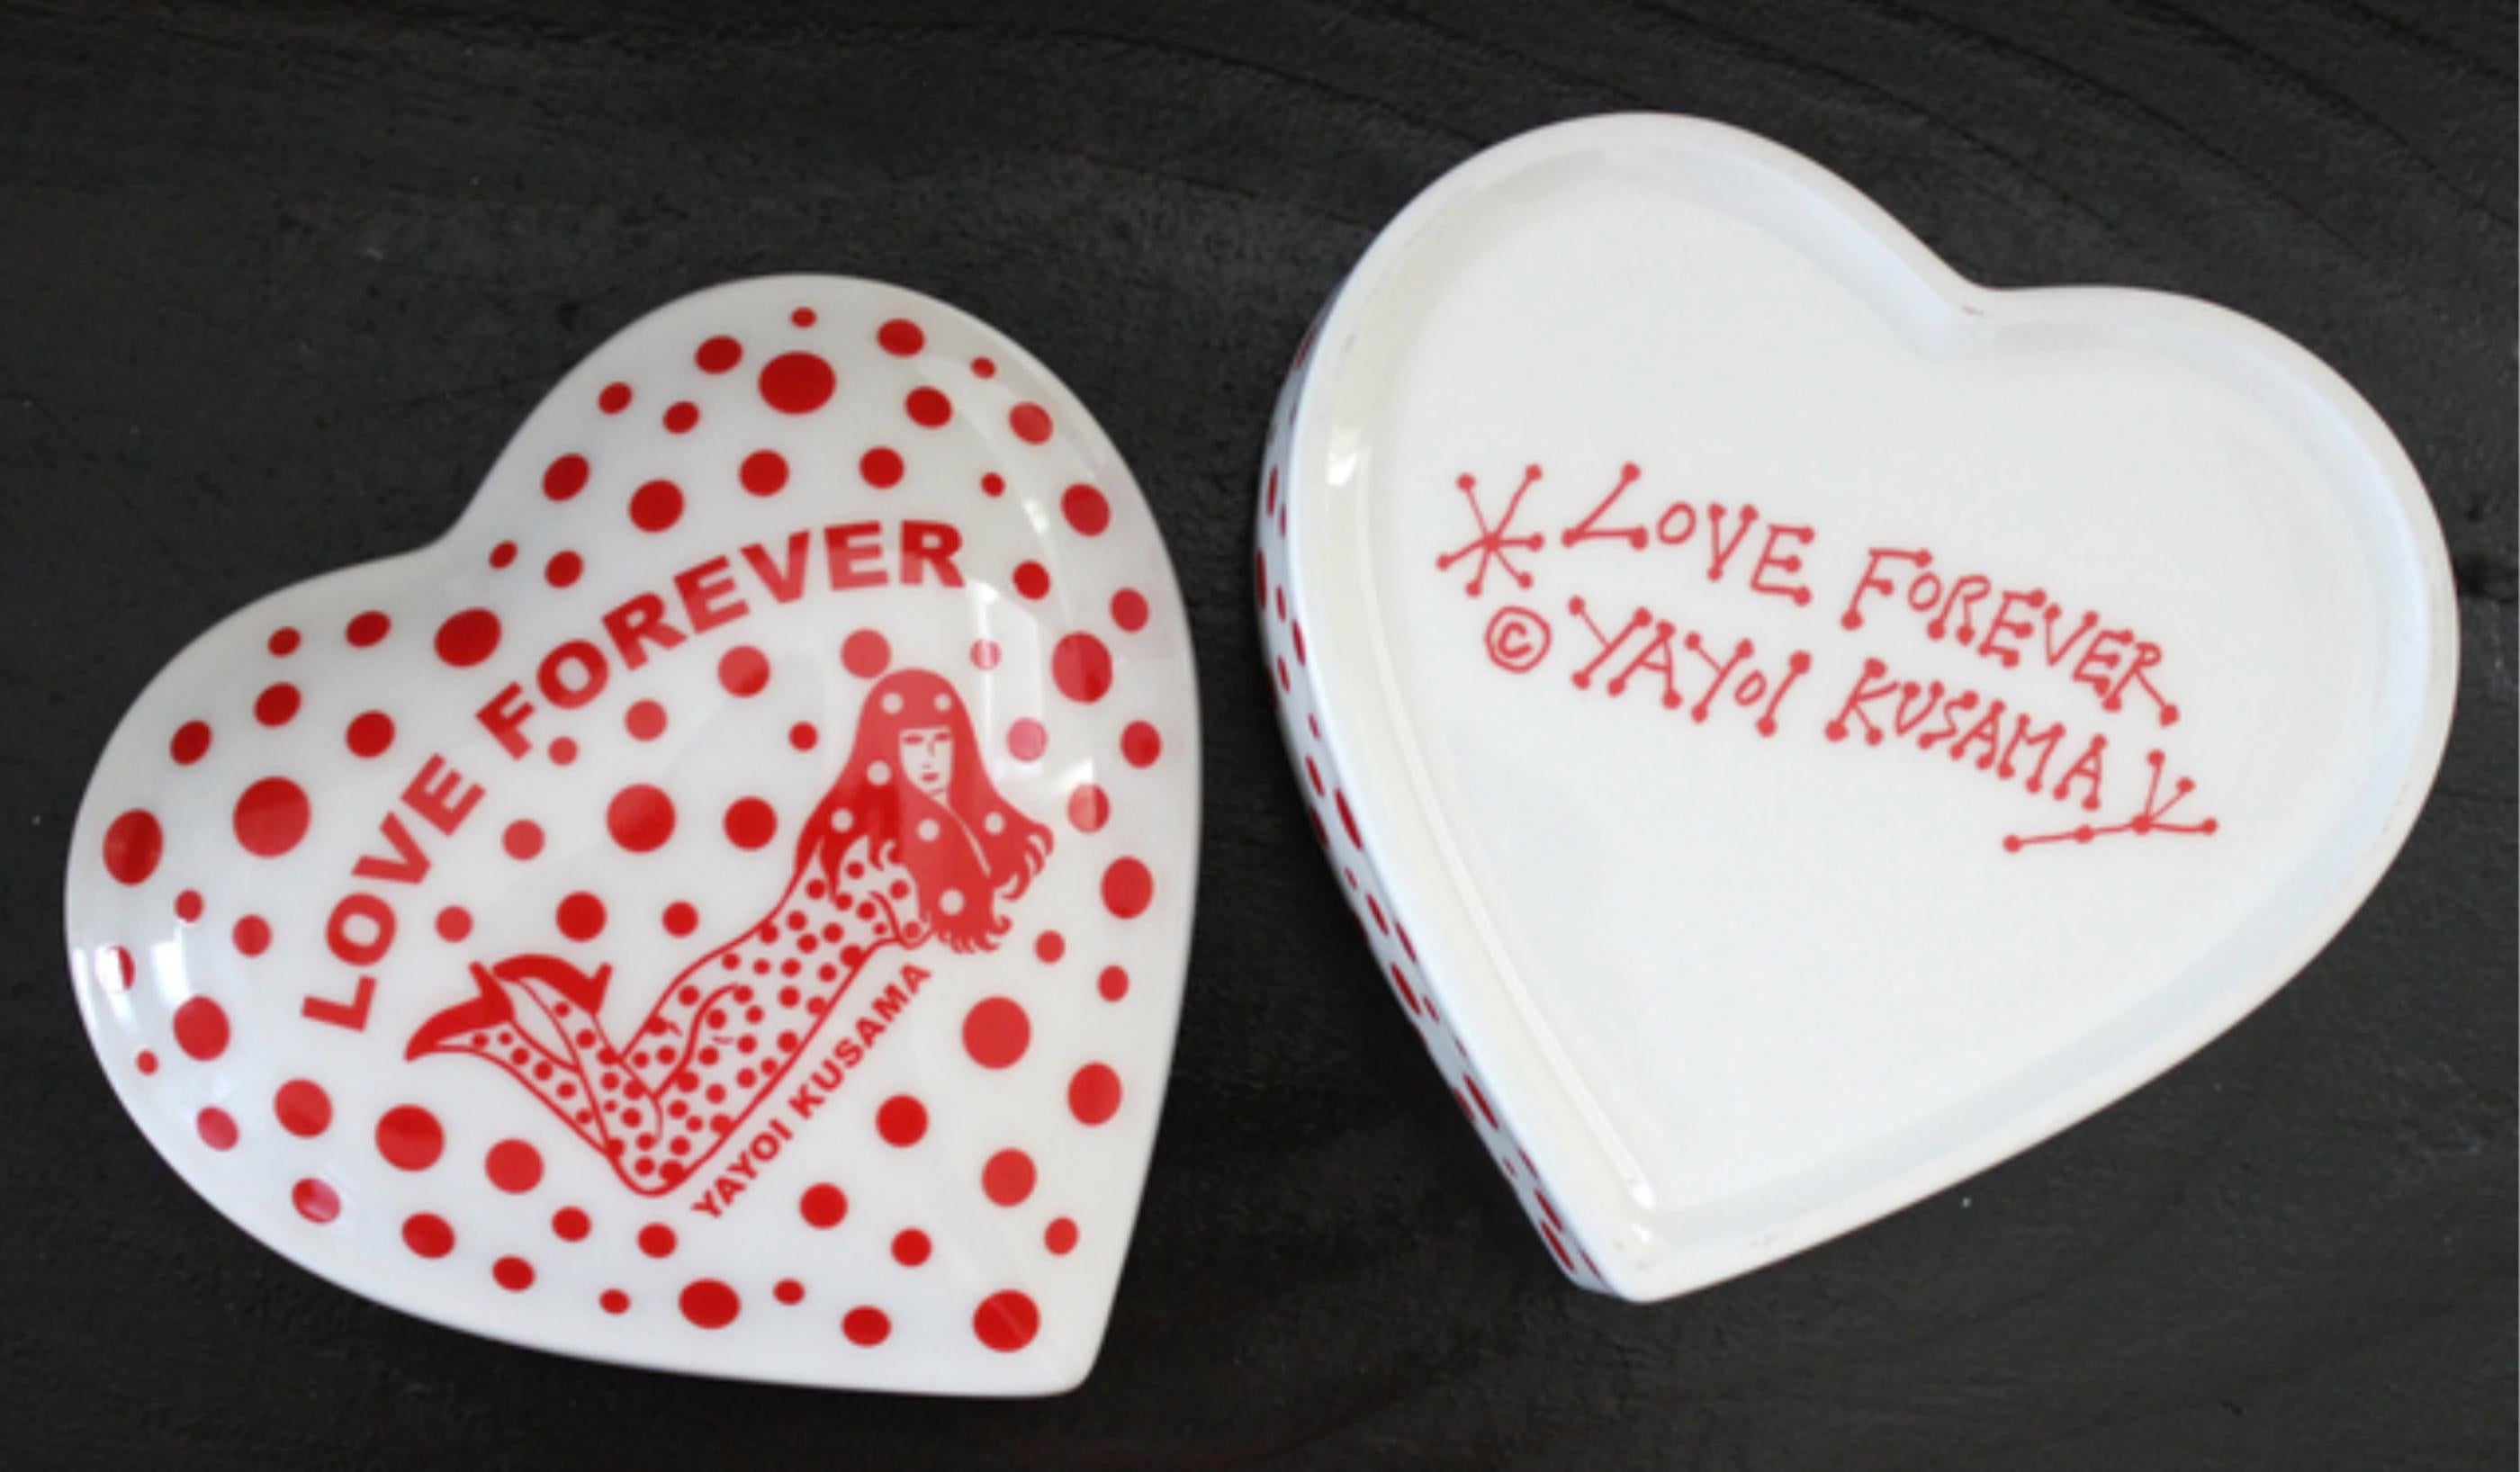 Love Forever - Pop Art Mixed Media Art by Yayoi Kusama